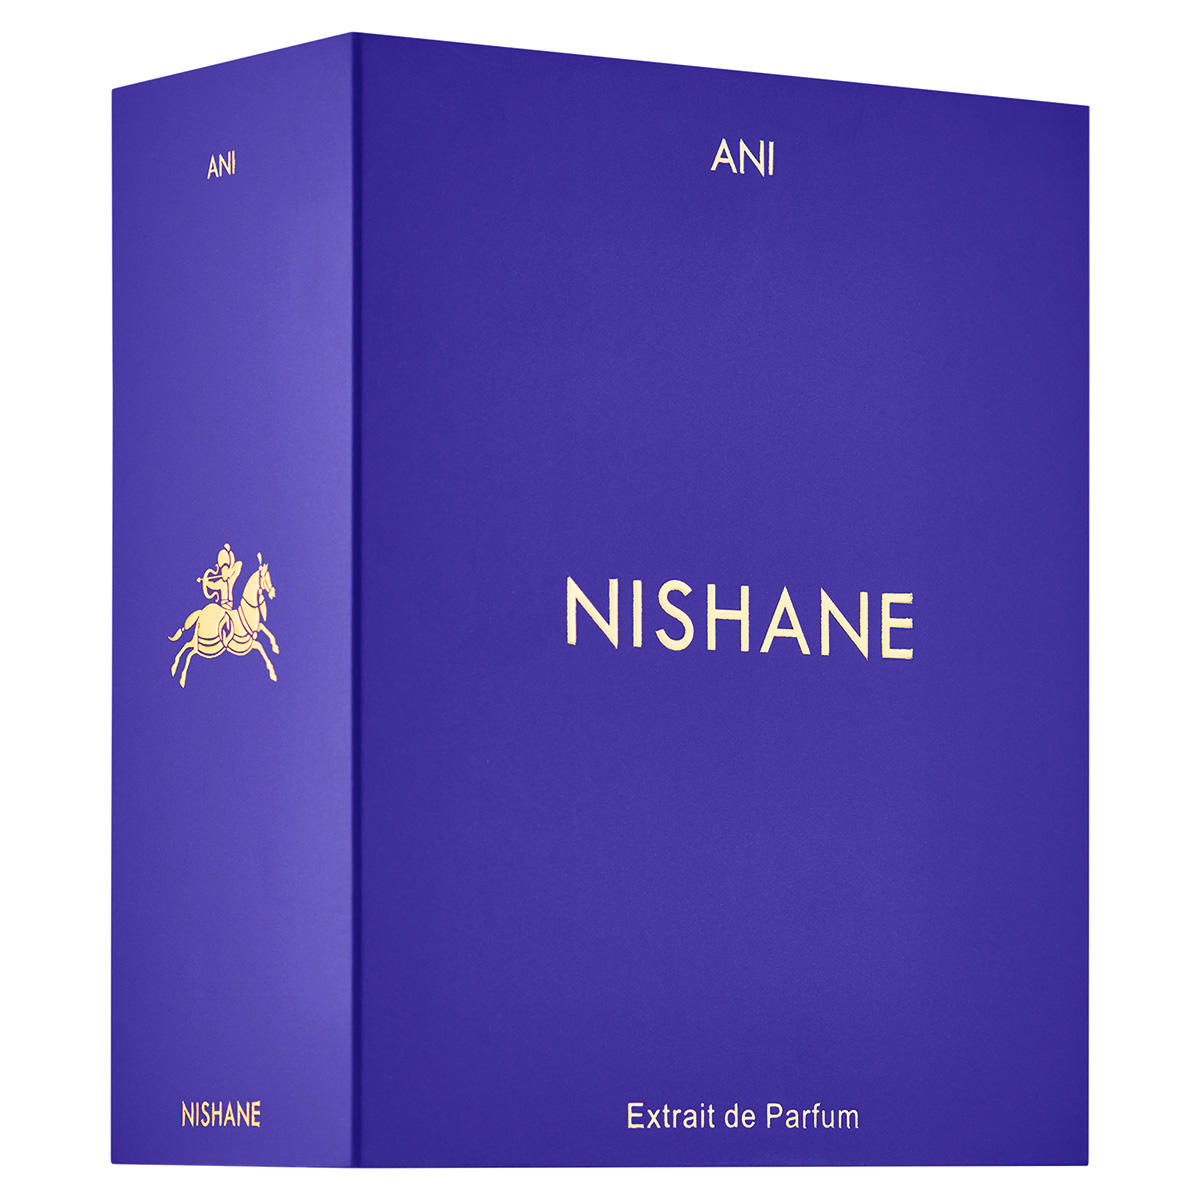 NISHANE ANI Extrait de Parfum 100 ml - 4